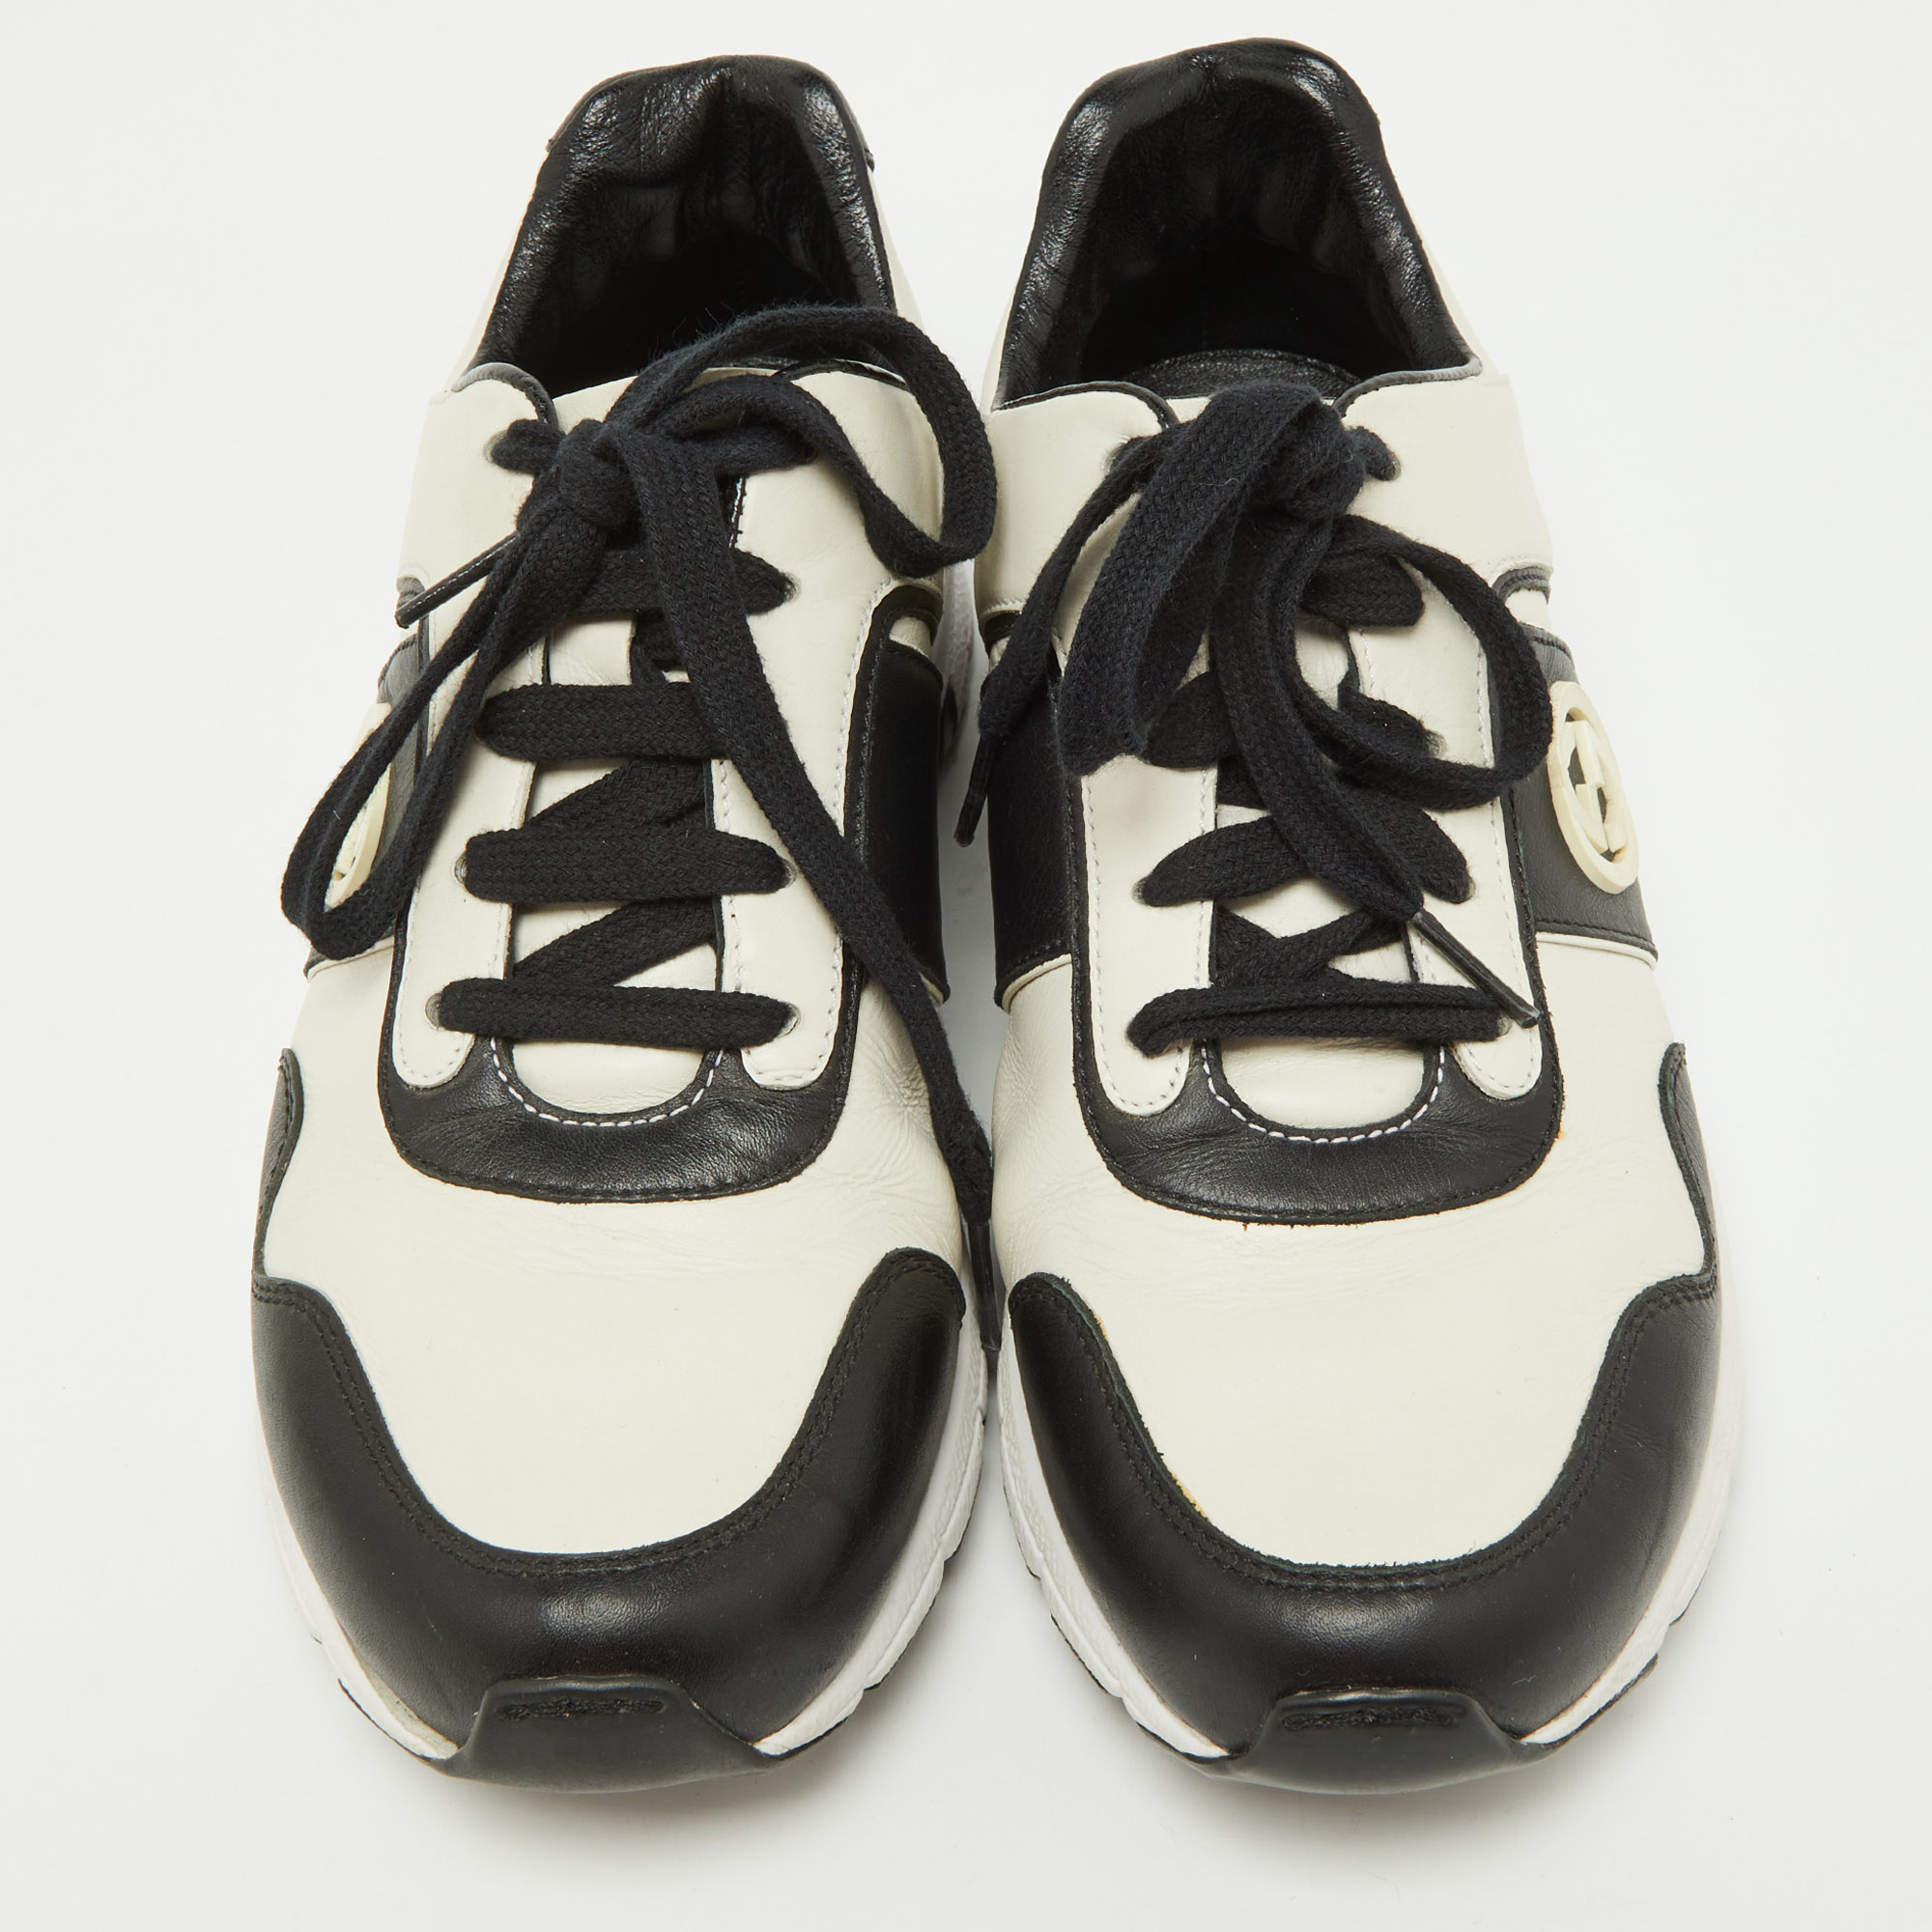 Gucci Black/White Leather Miro Sneakers Size 38.5